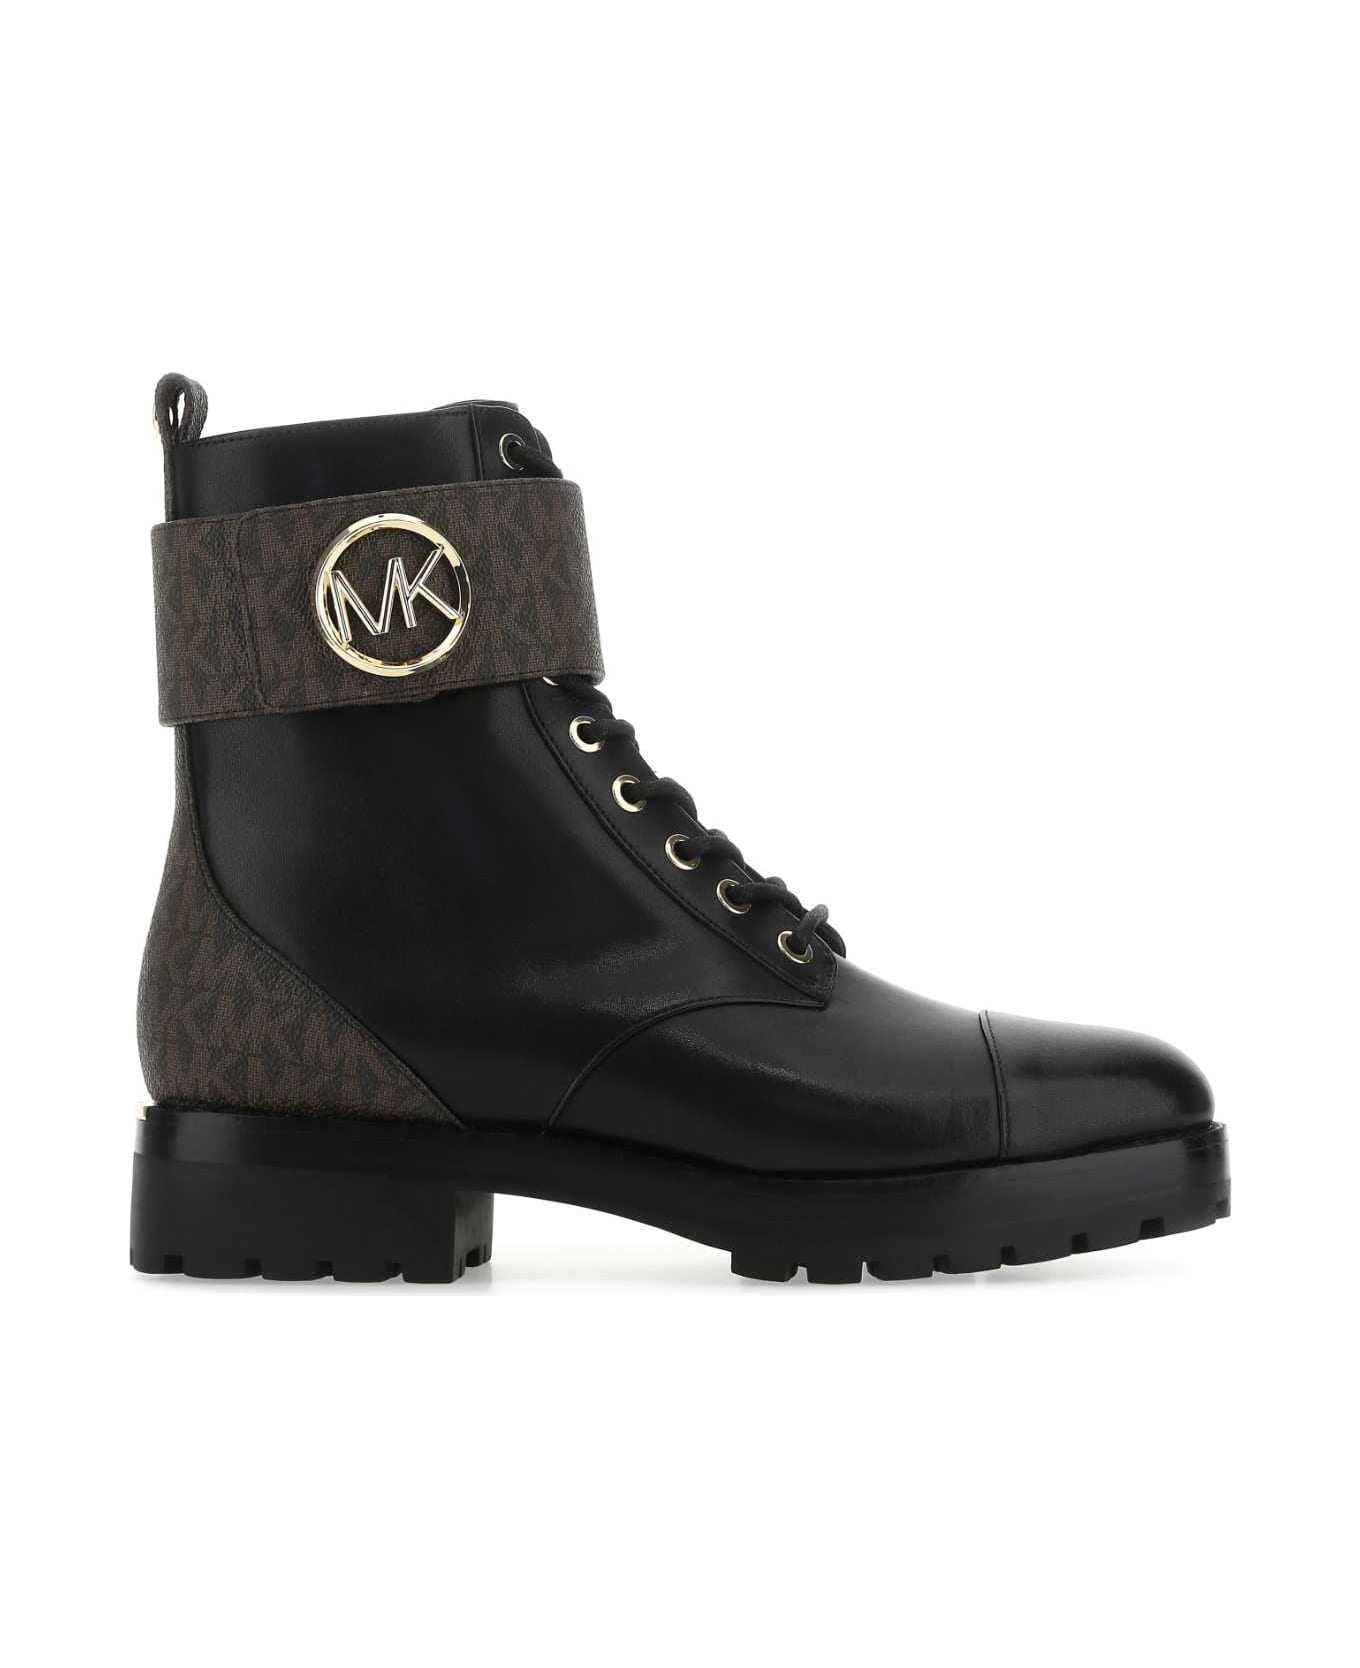 Michael Kors Black Leather Tatum Ankle Boots - BROWNBLK